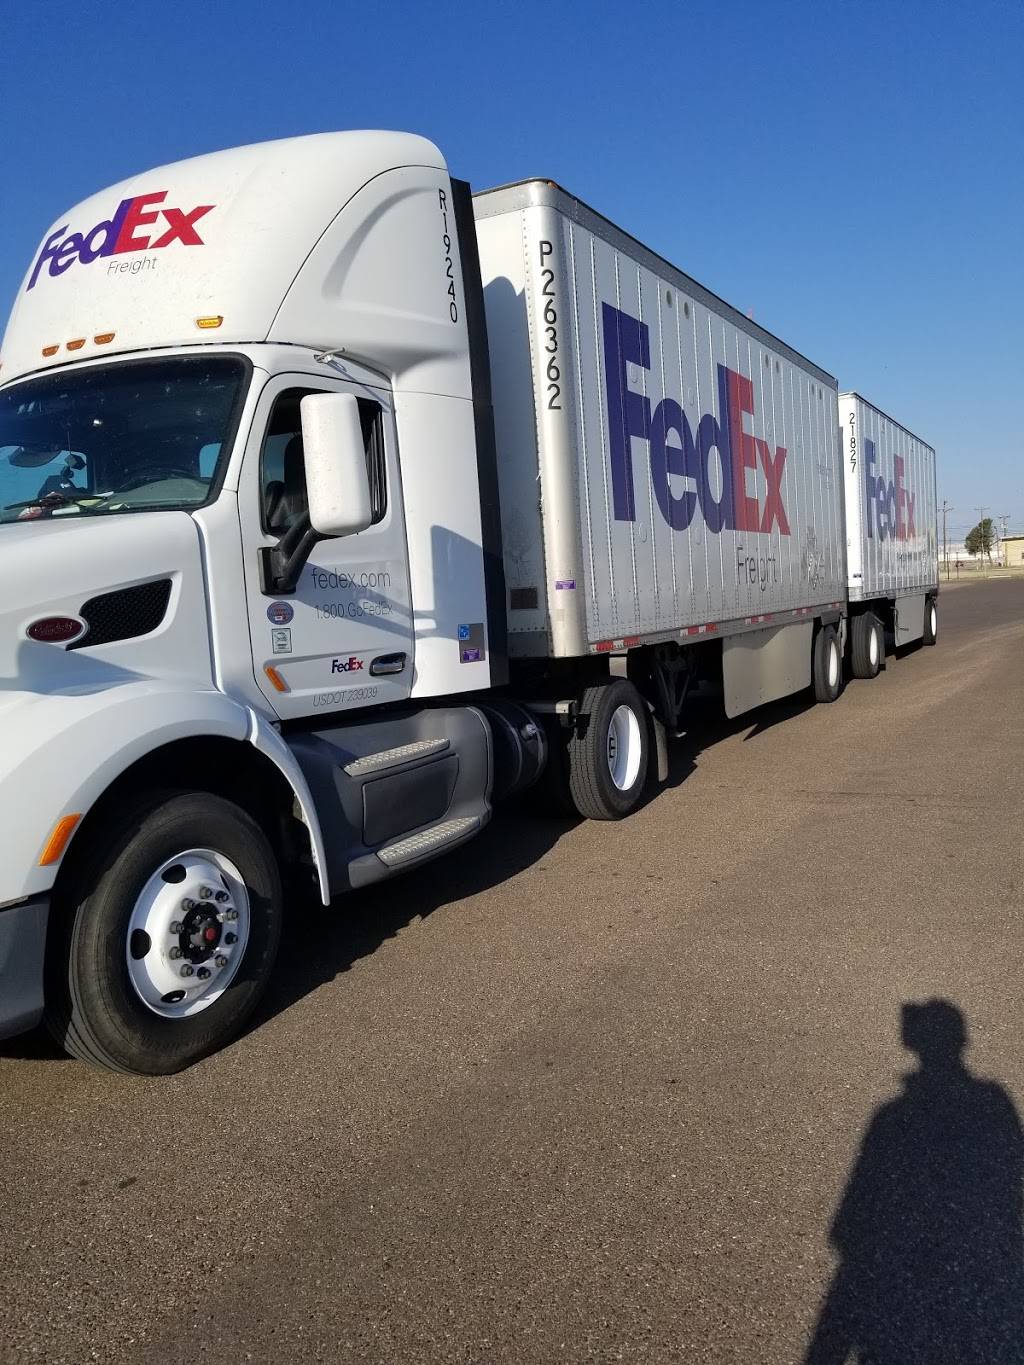 FedEx Freight - 4201 M.L.K. Jr Blvd, Lubbock, TX 79404